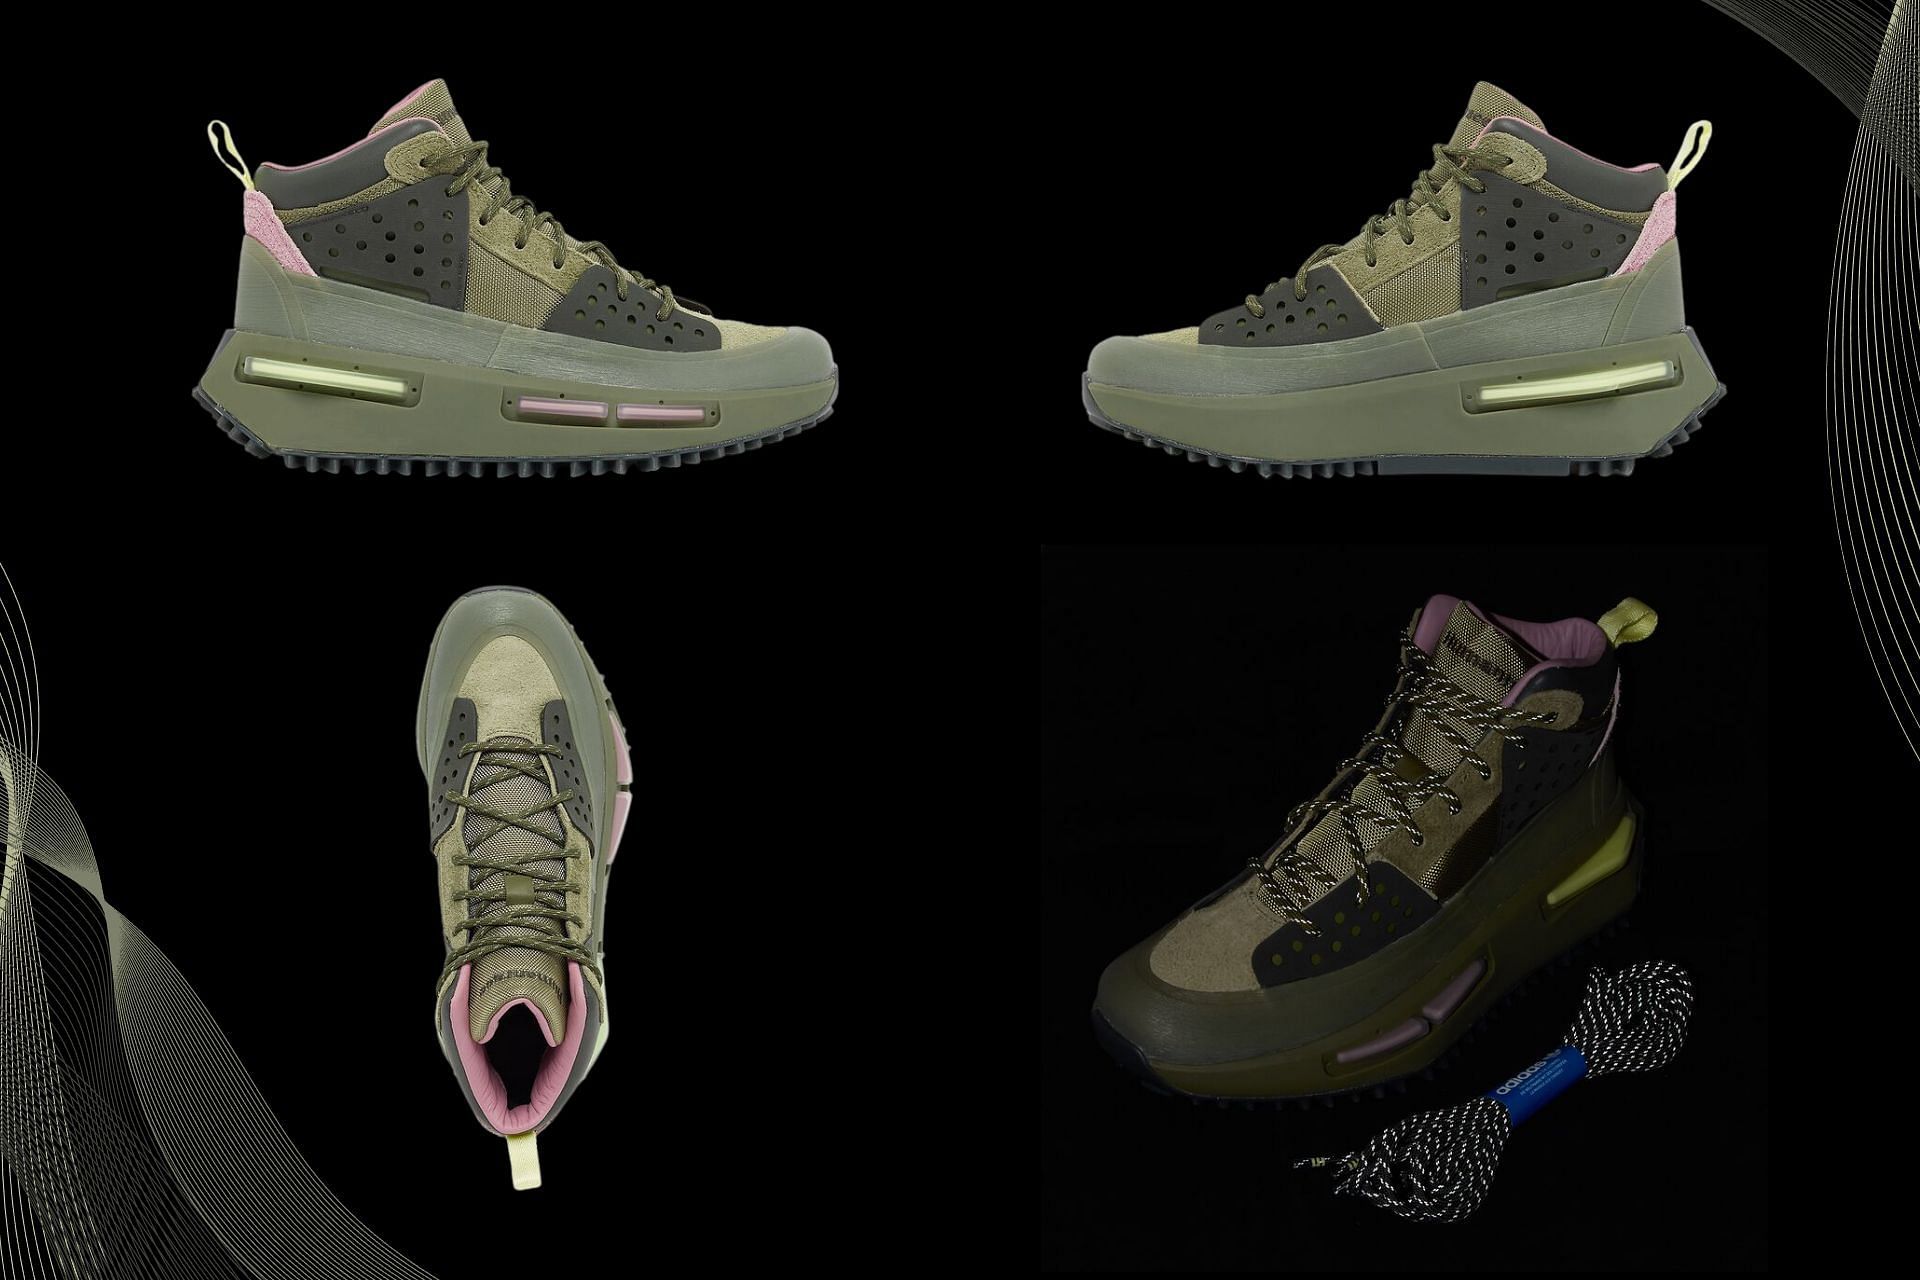 Adidas x Pharrell Williams Hu NMD S1 Ryat "Focus Olive" sneakers: Where